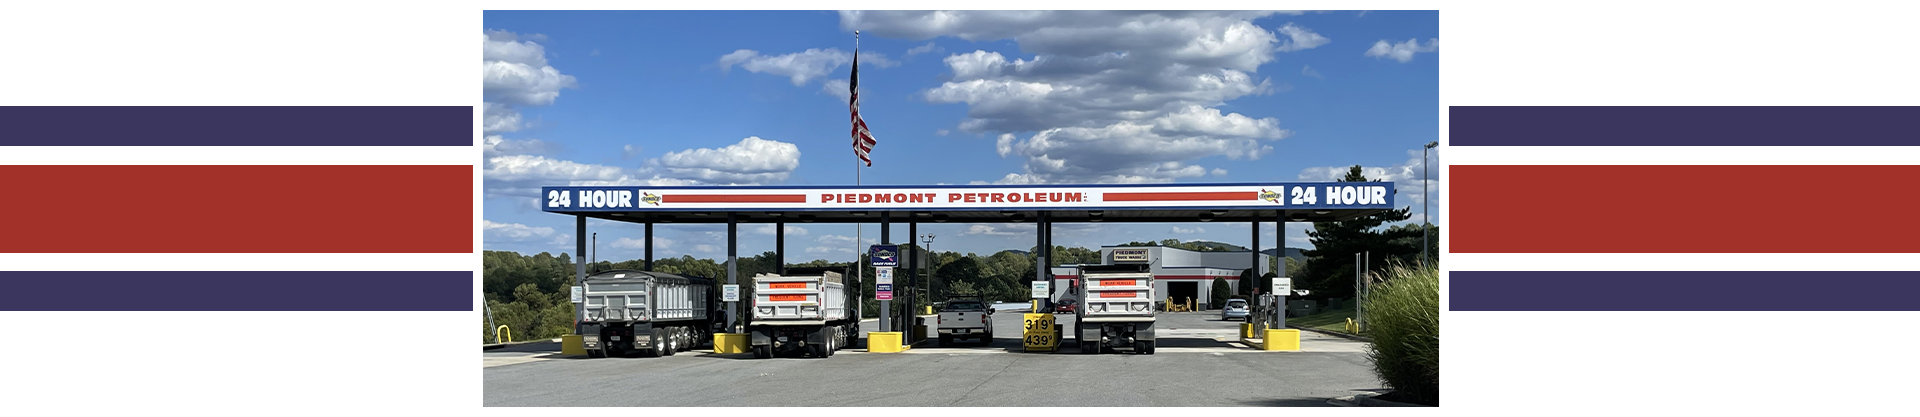 Piedmont Petroleum Gas Station